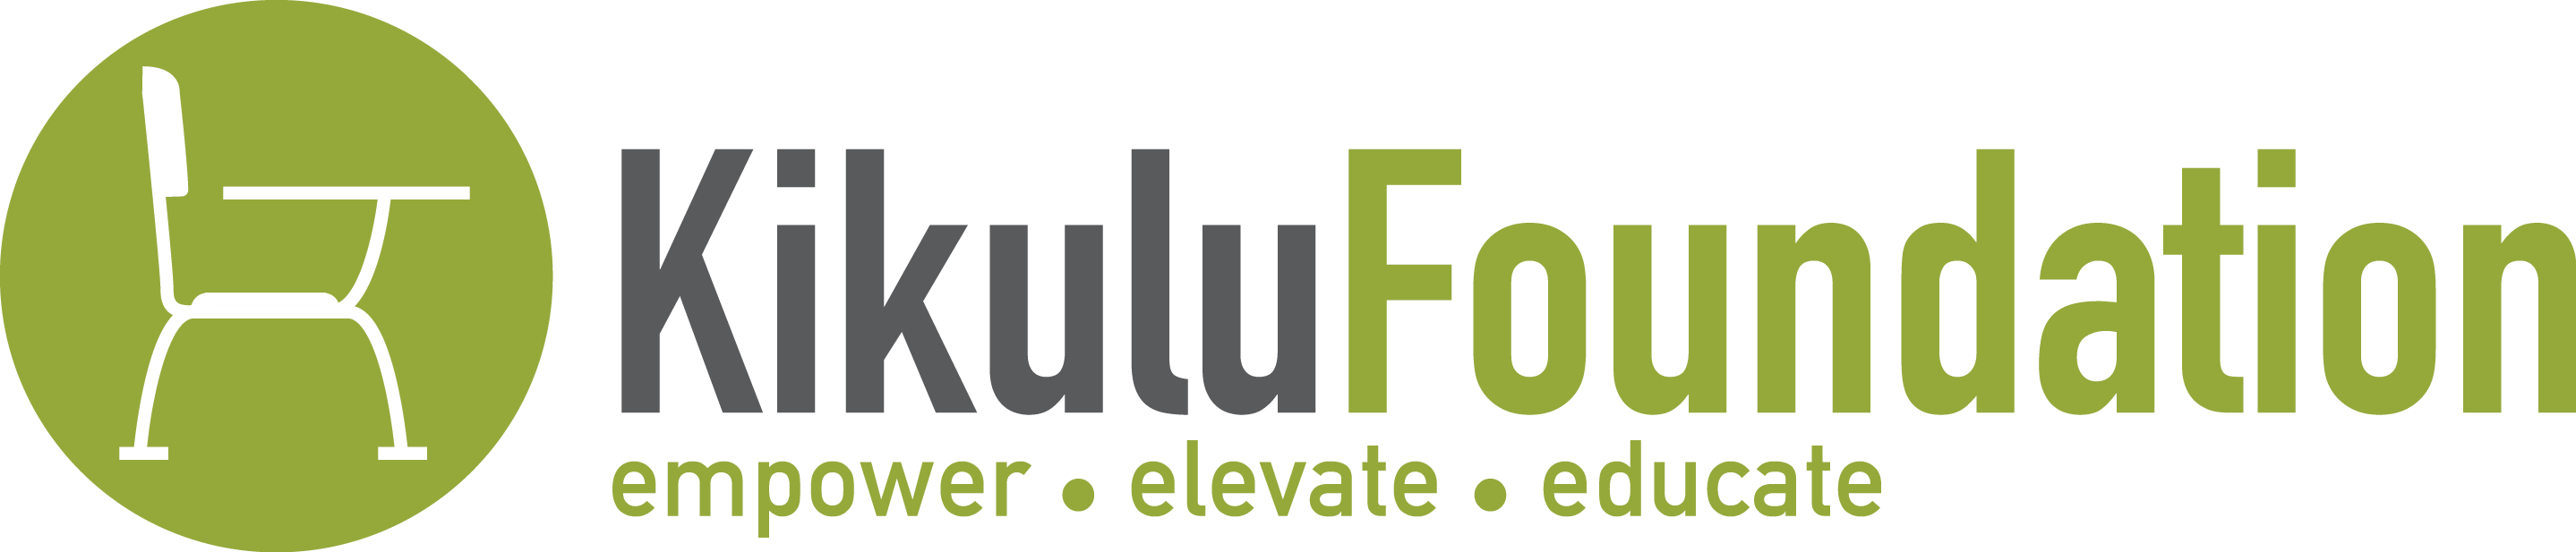 The Kikulu Foundation logo